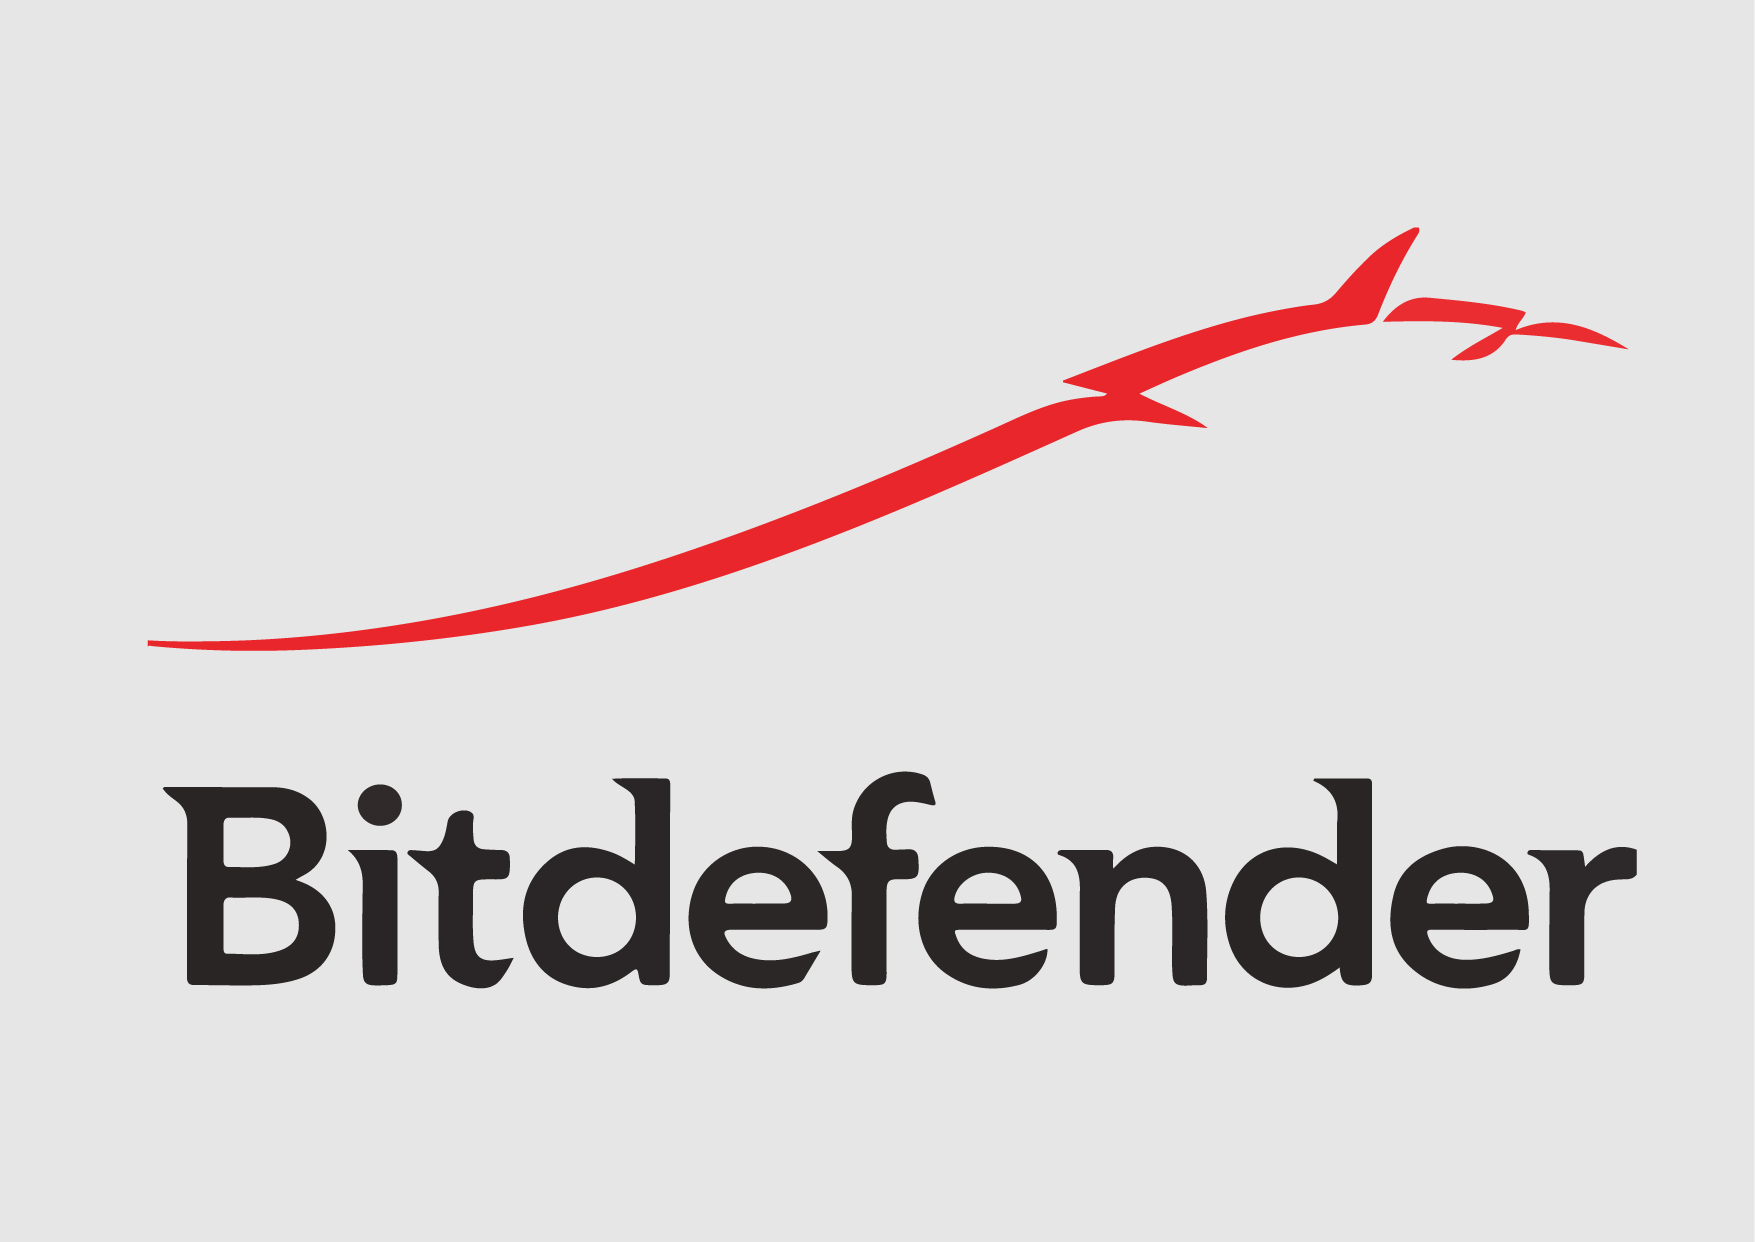 logo_bitdefender